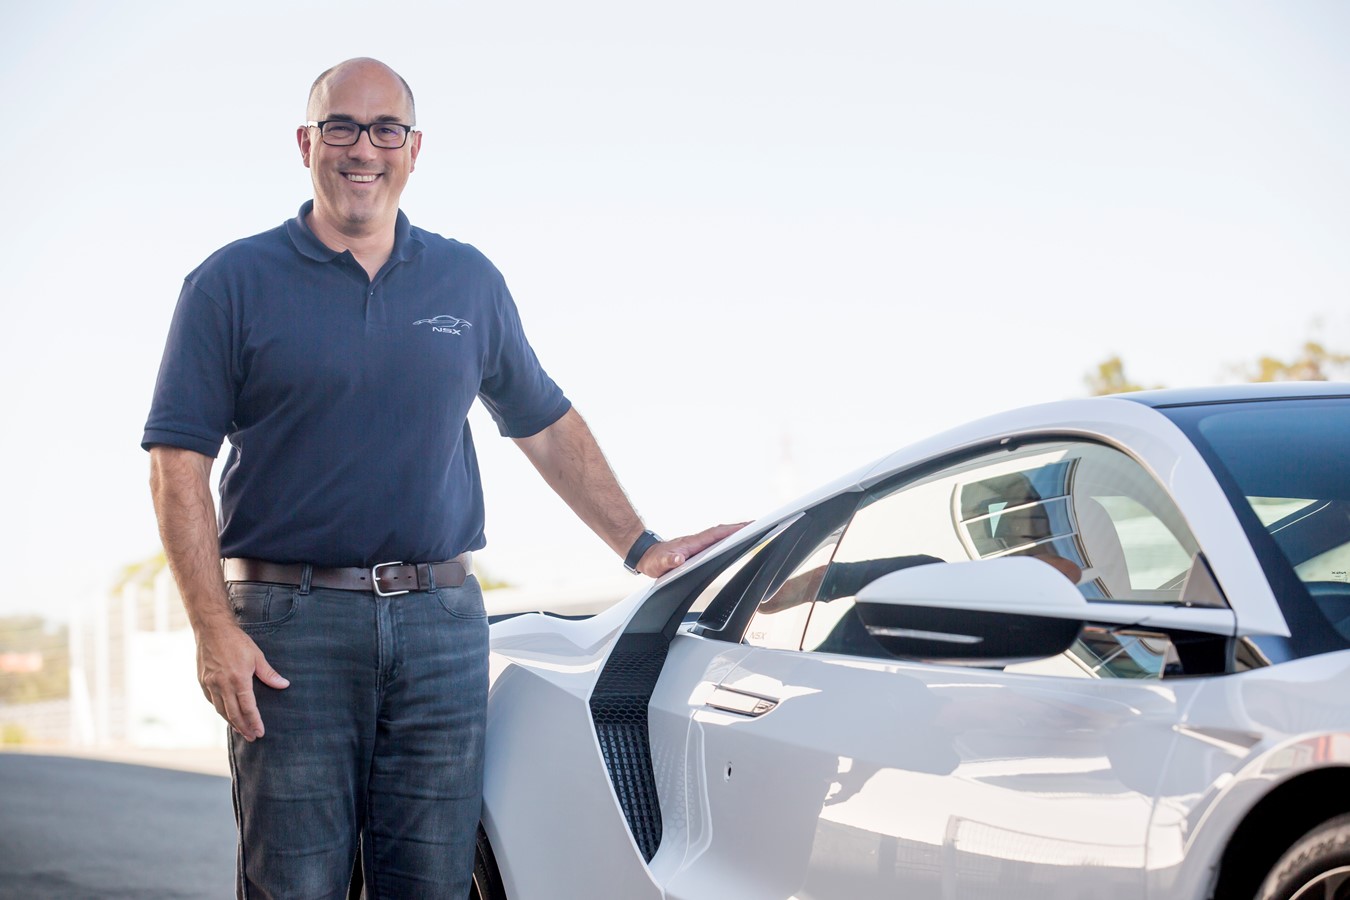 Vehicle engineering leader Jason Bilotta explains world first technology application on new Honda NSX